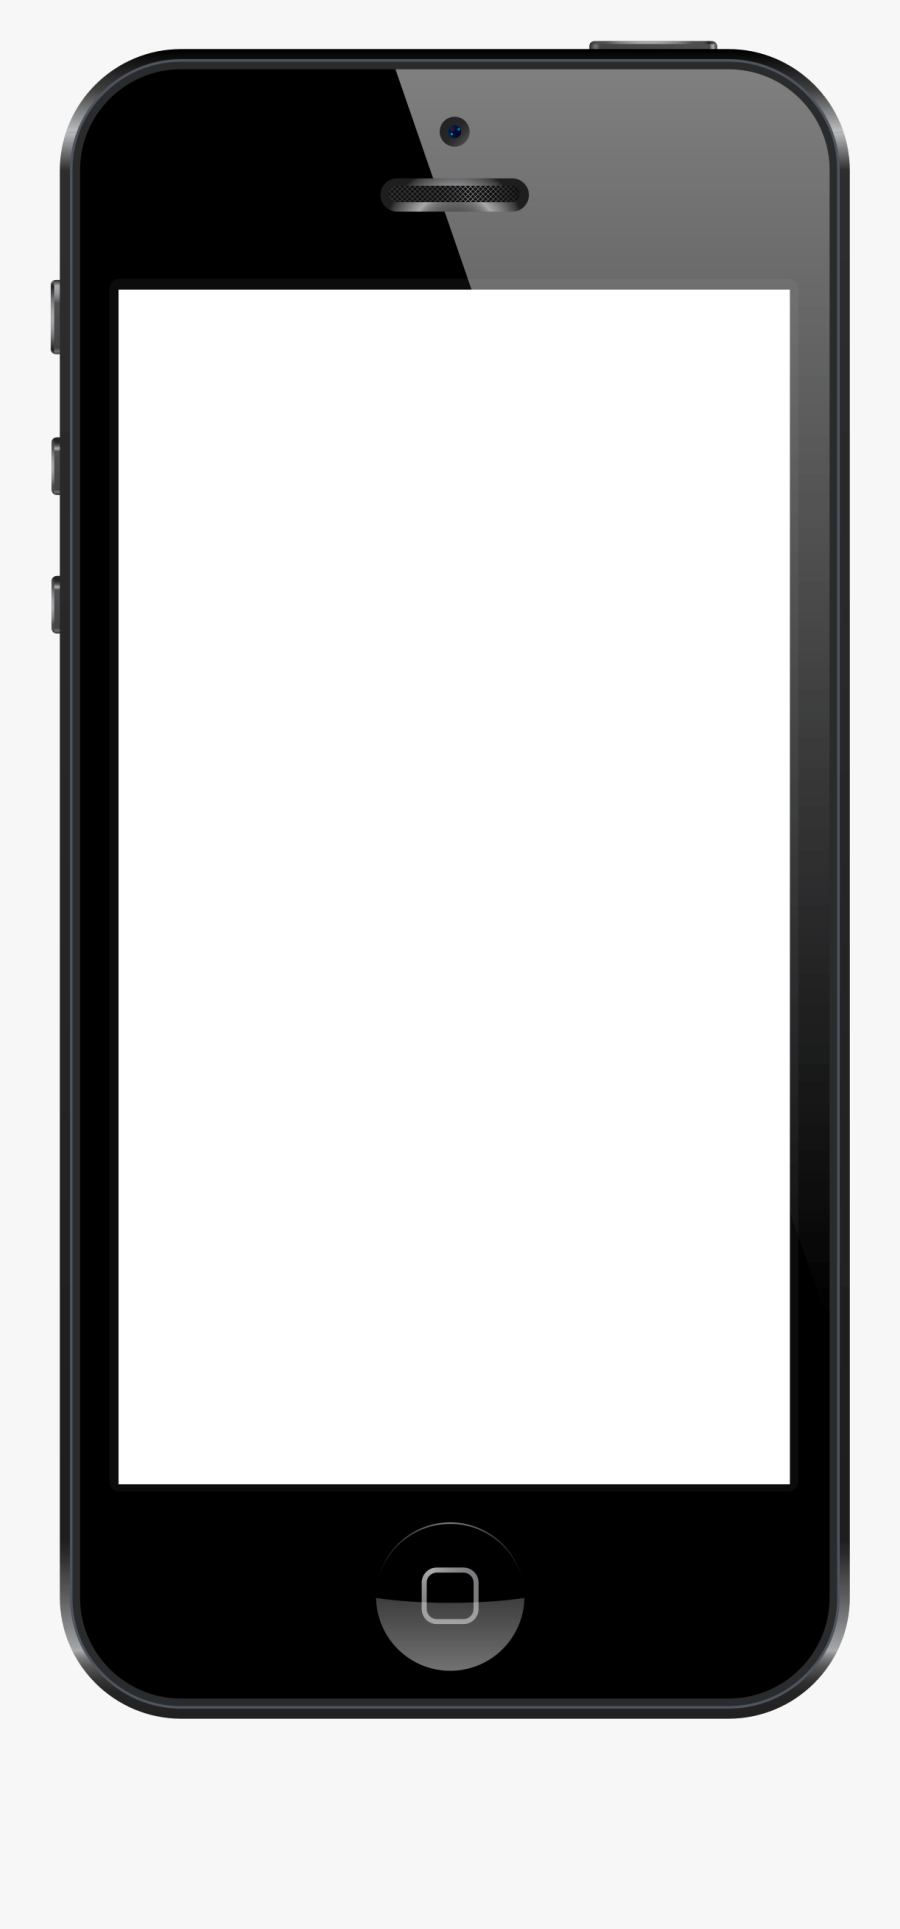 Iphone 5 Black - Phone Transparent Png, Transparent Clipart